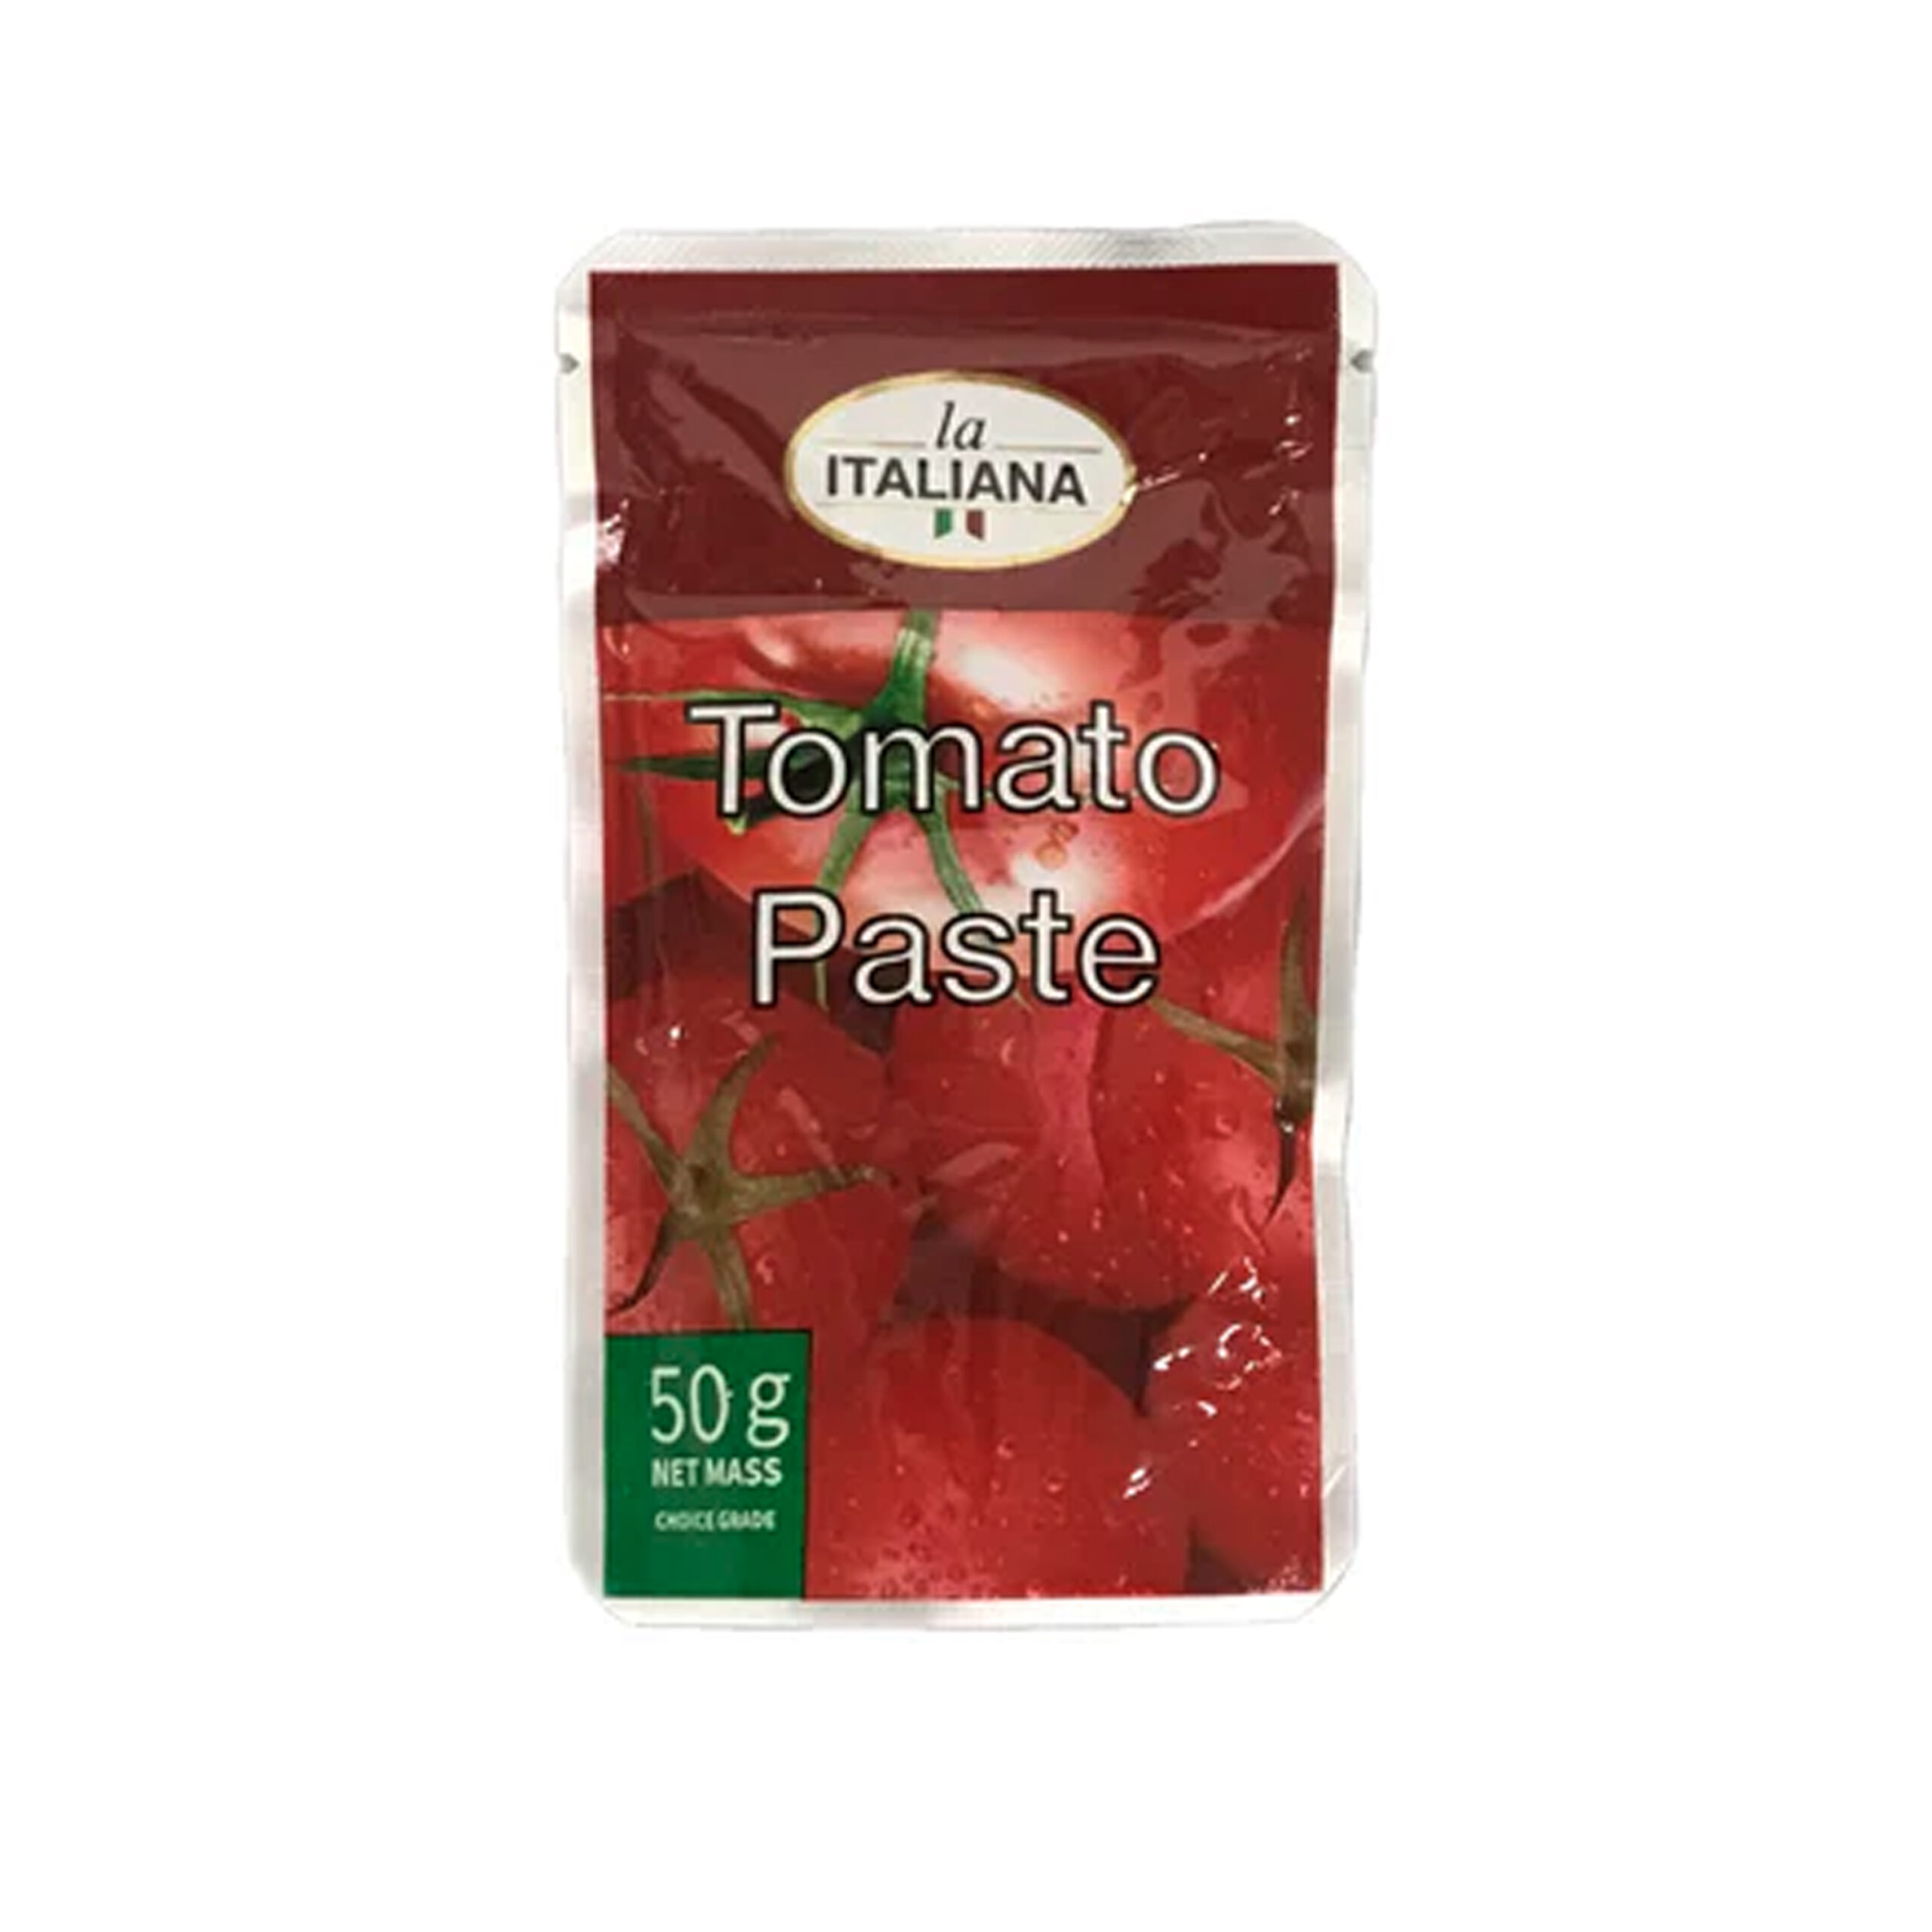 LA ITALIANA
TOMATO PASTE
50g